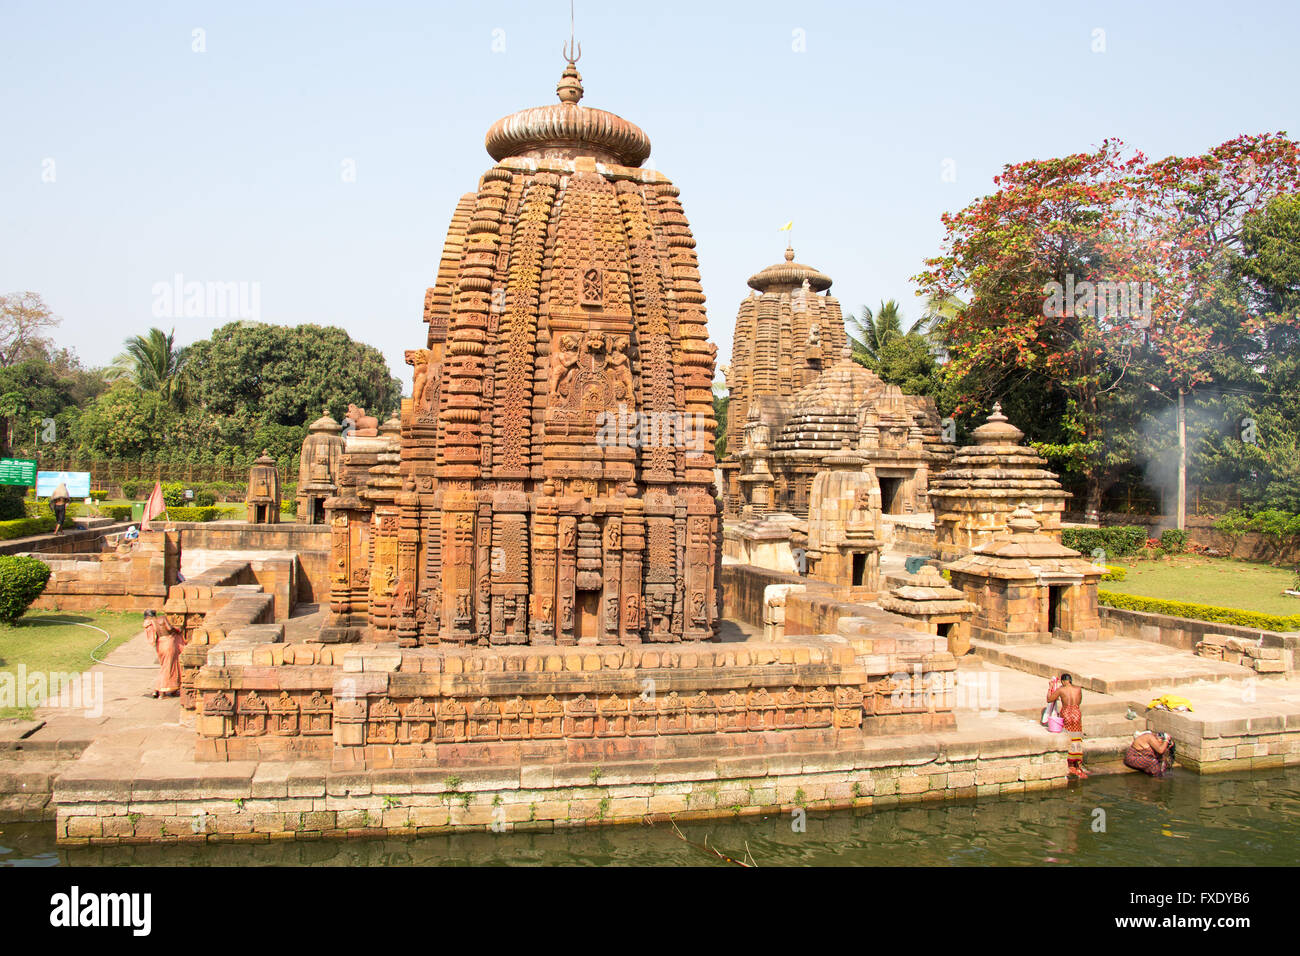 Mukteswar tempio indù, Bhubaneshwar, Odishar, India Foto Stock